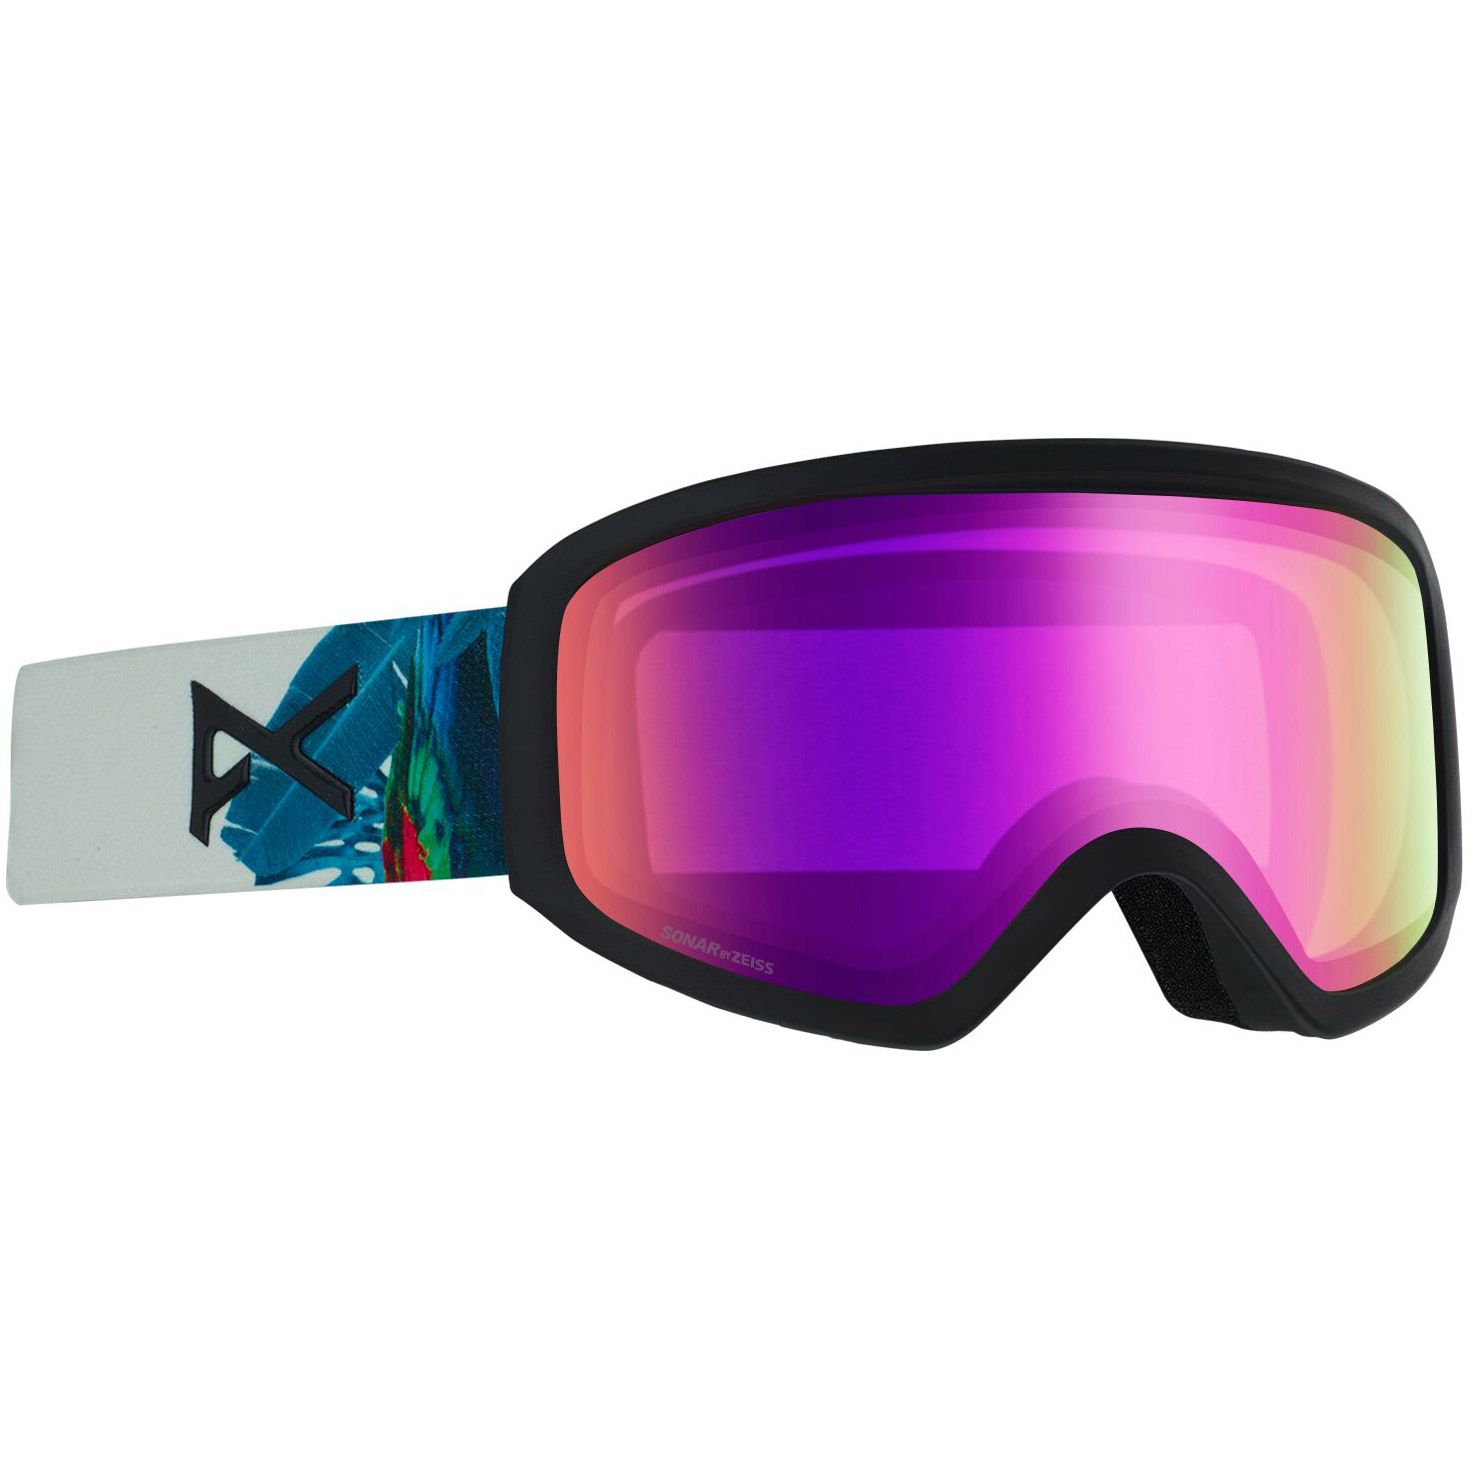 Masque de Ski Insight - Parrot - Sonar Pink + Amber